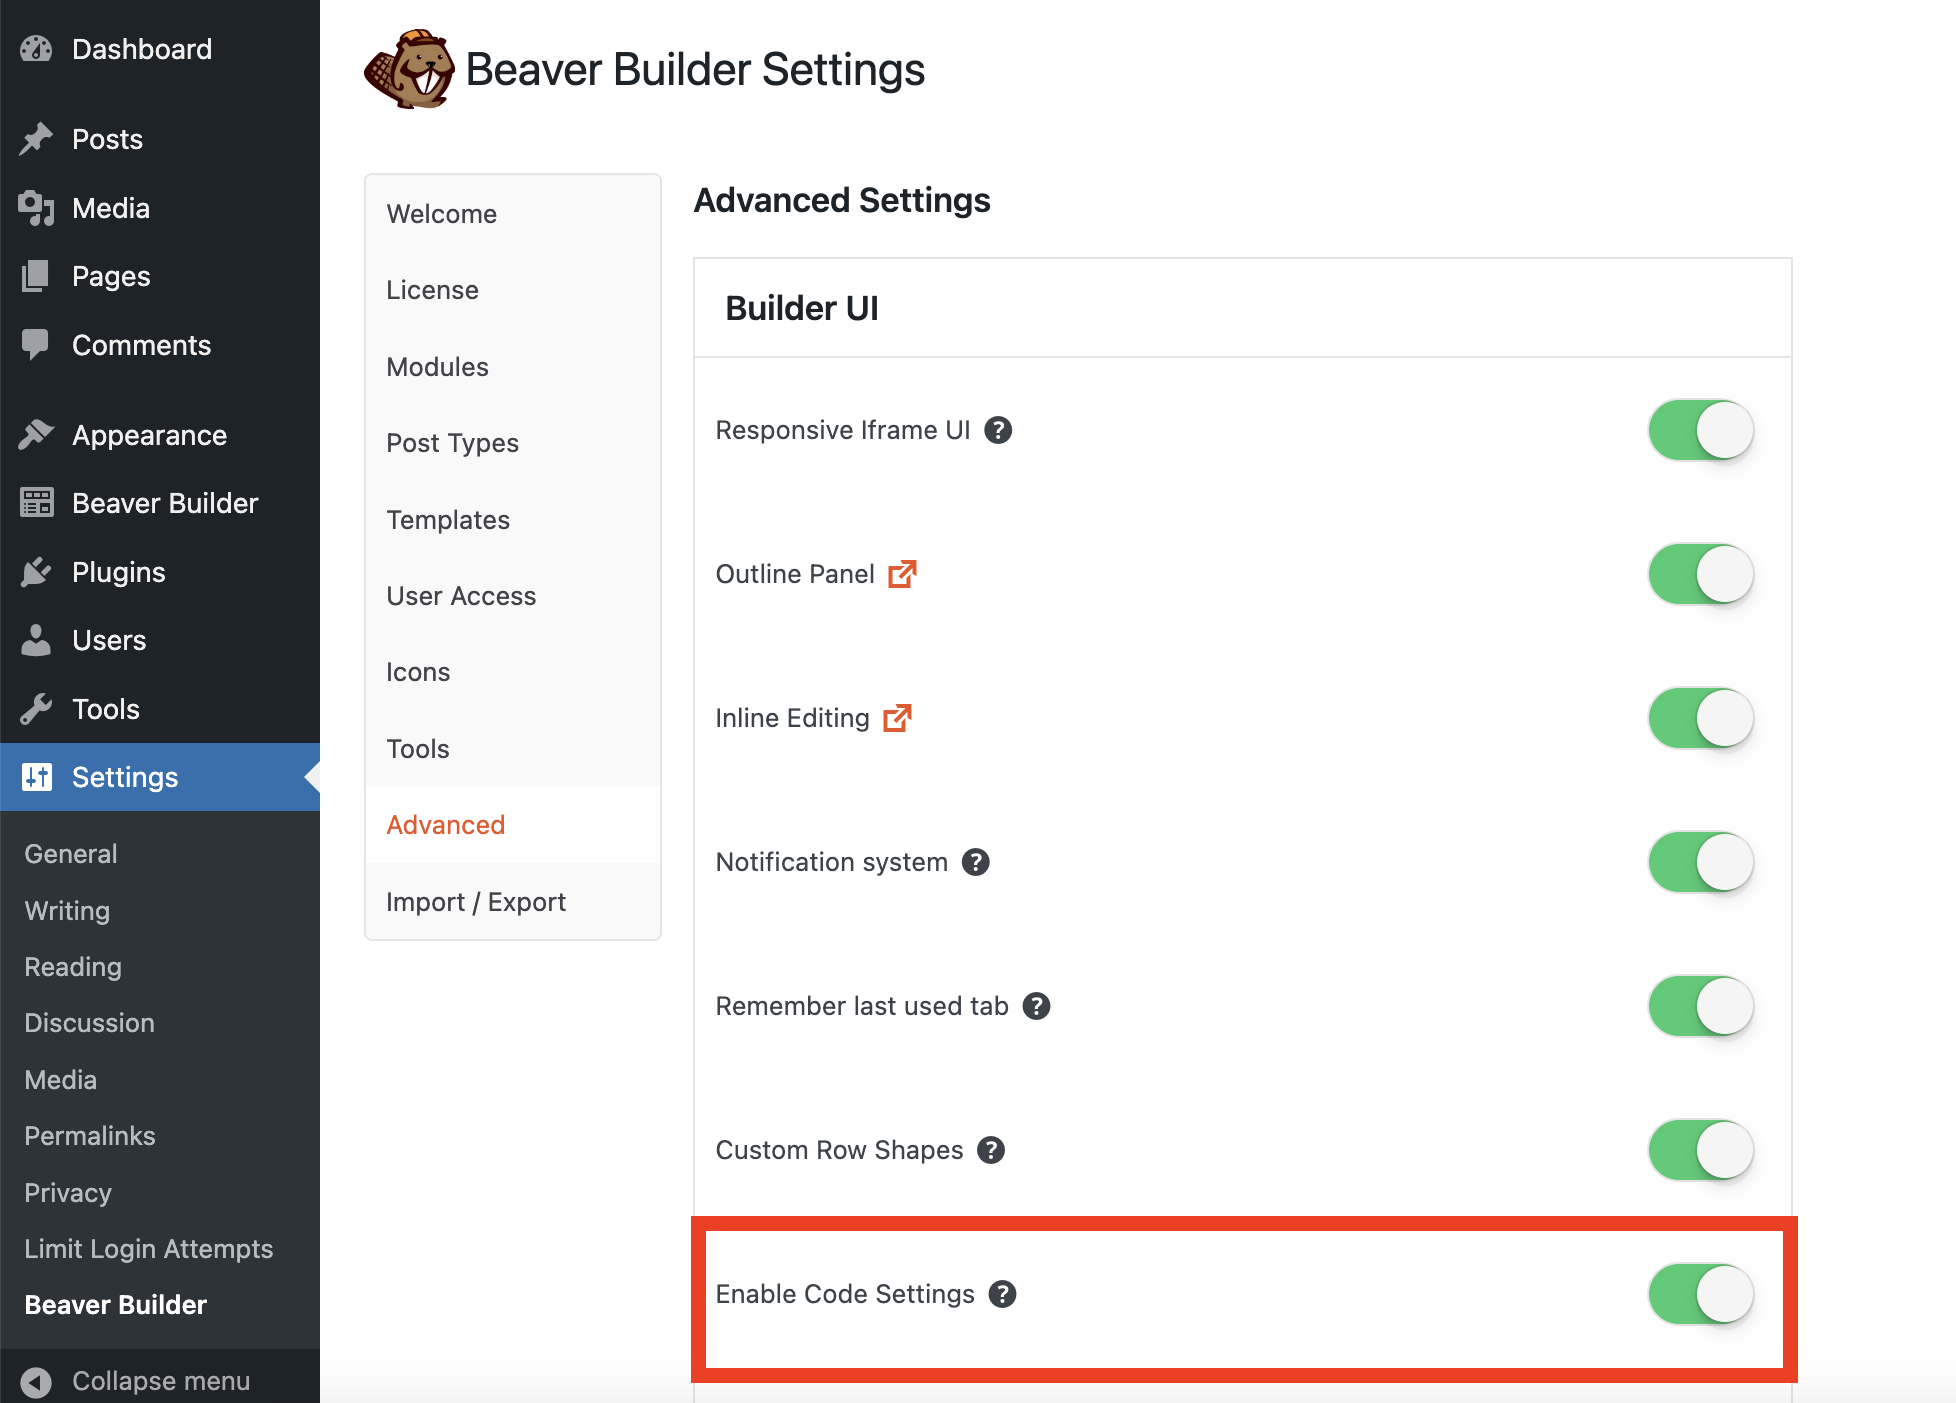 Beaver Builder 2.7 settings enable code settings